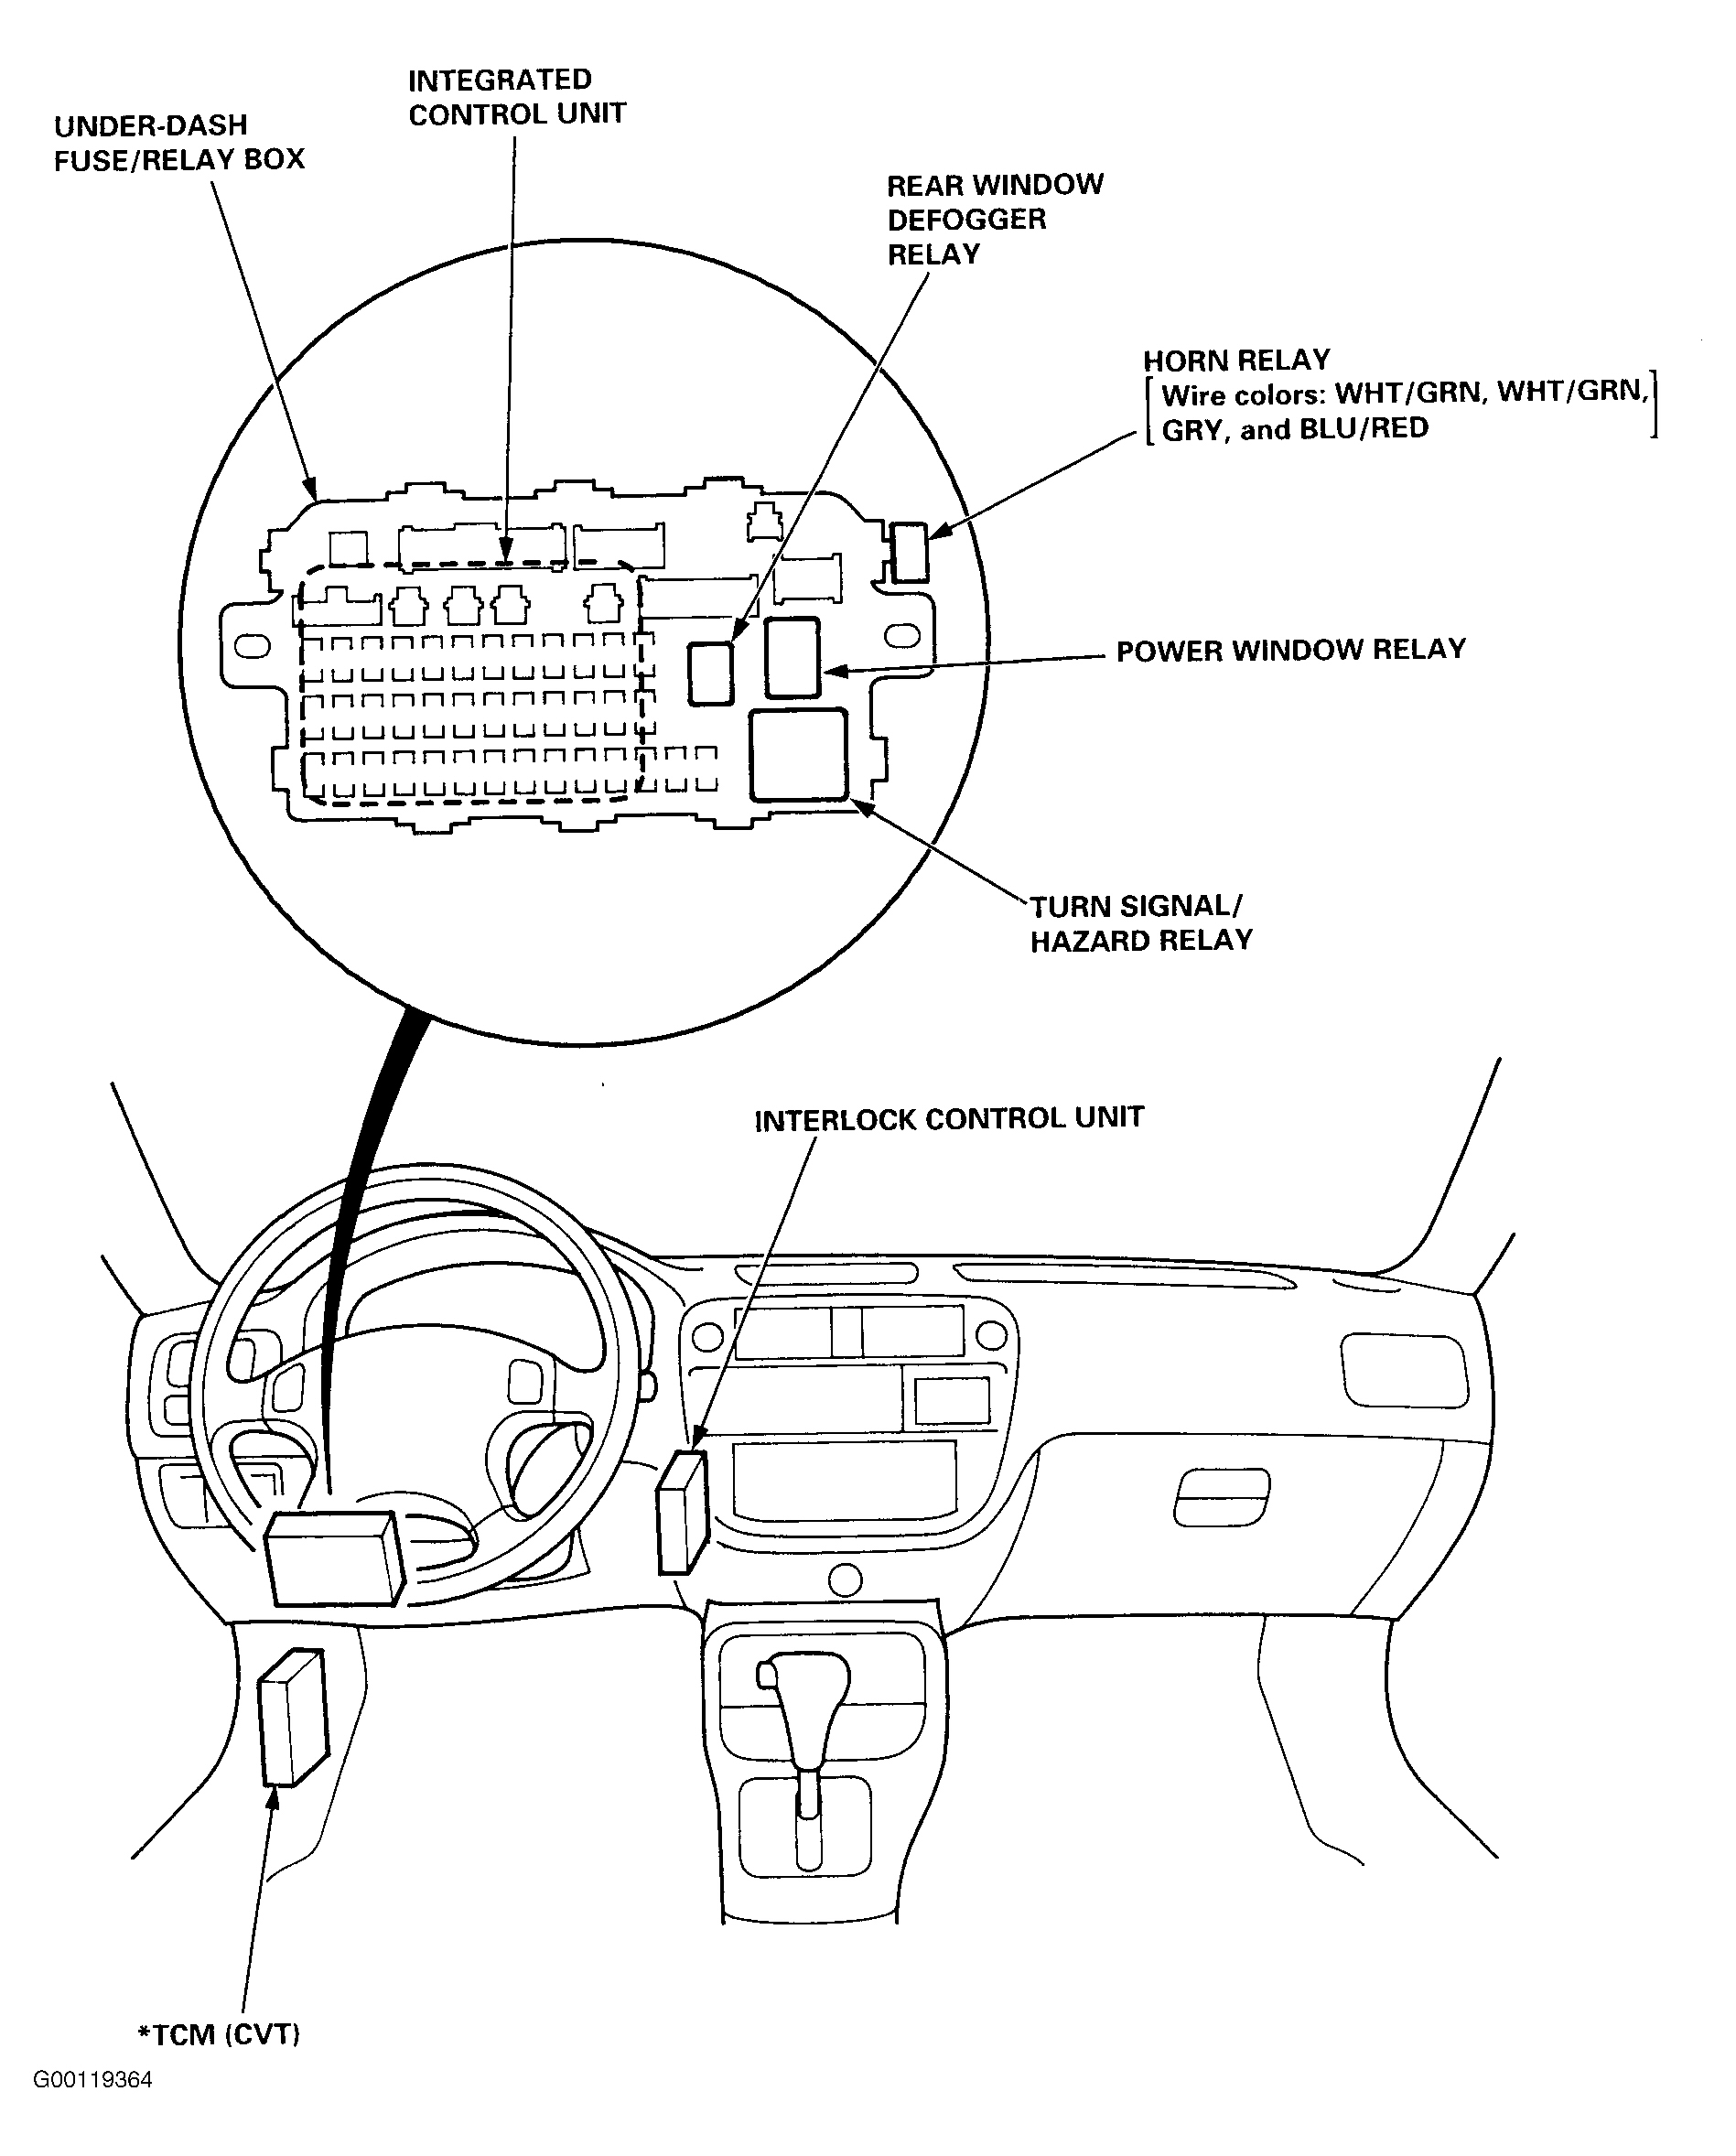 Honda Civic Si 1999 - Component Locations -  Locating Under-Dash Fuse/Relay Box (1996-97)